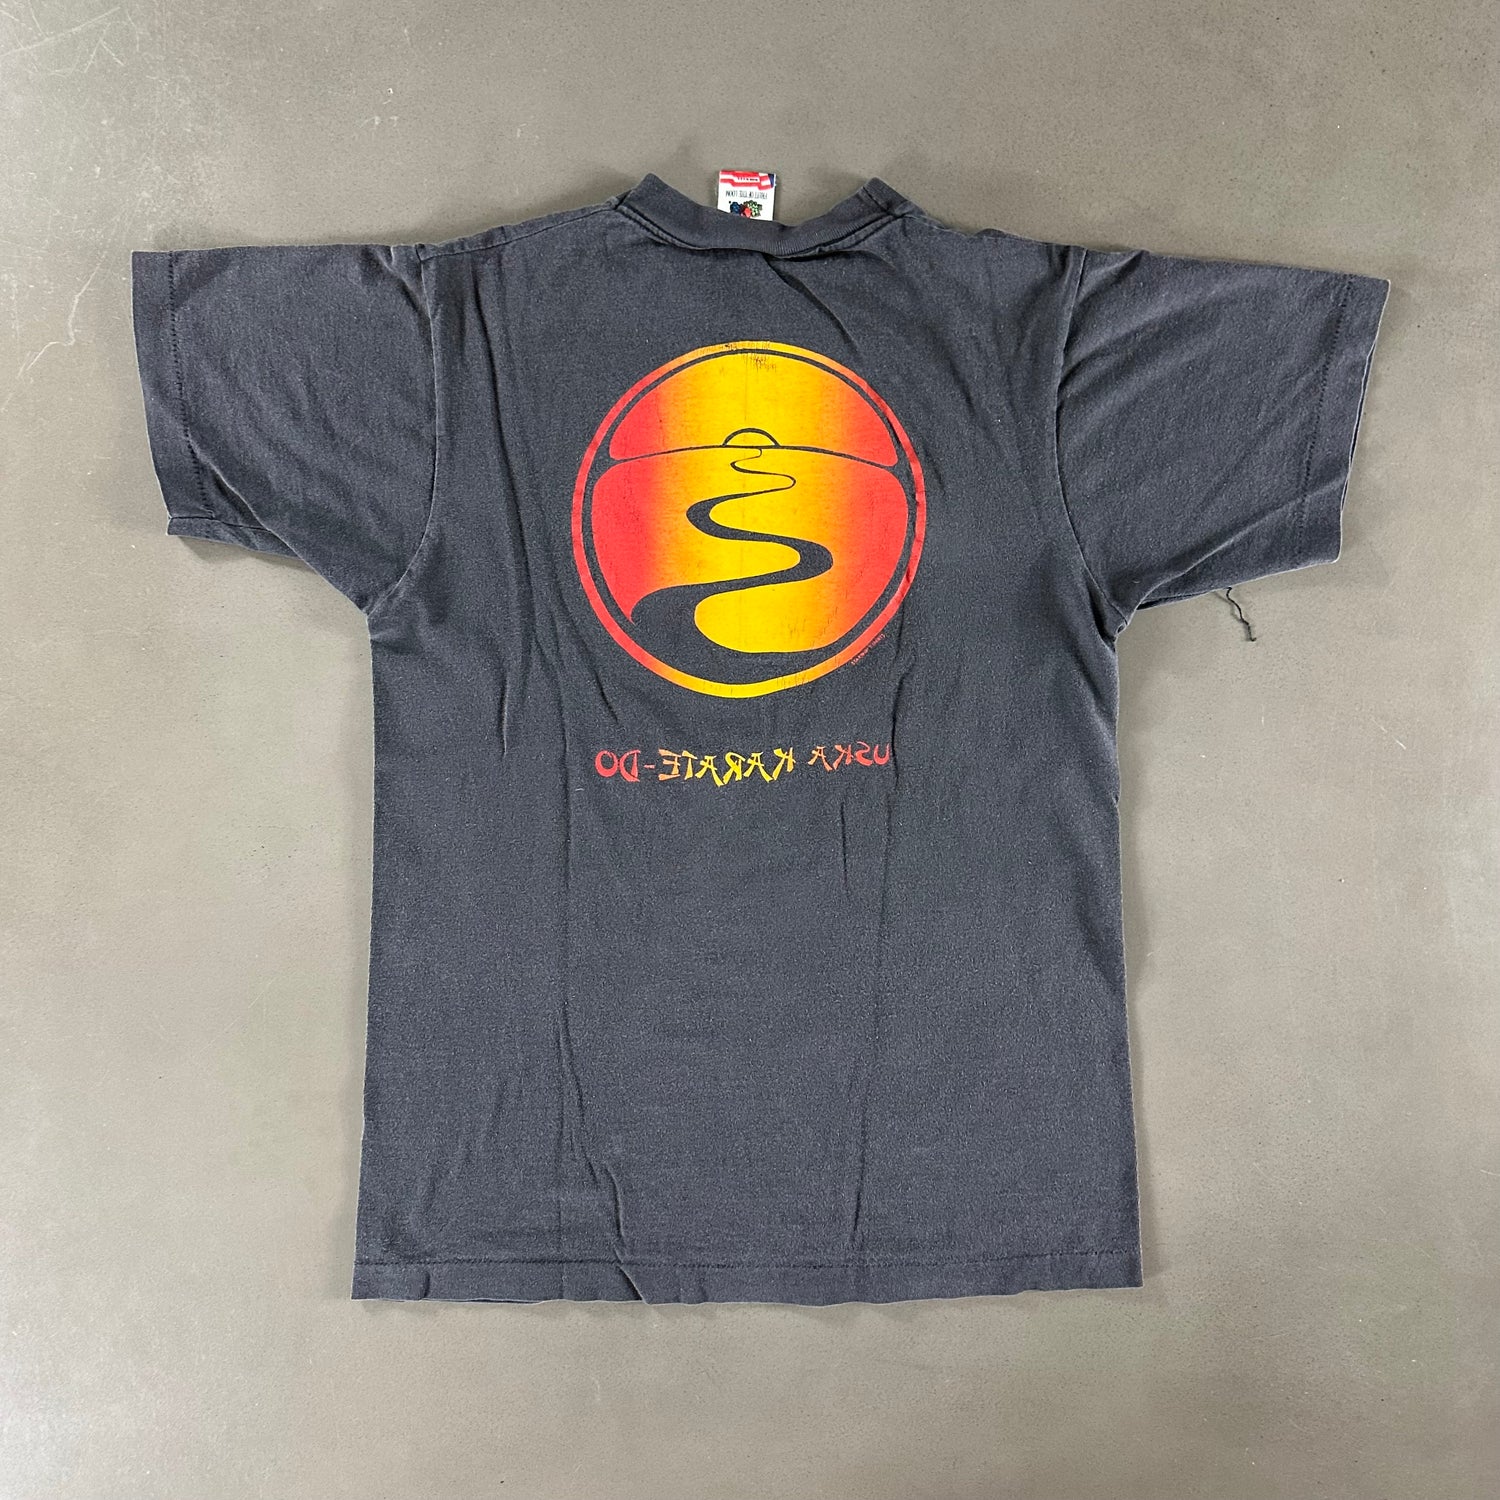 Vintage 1990s Karate T-shirt size Medium